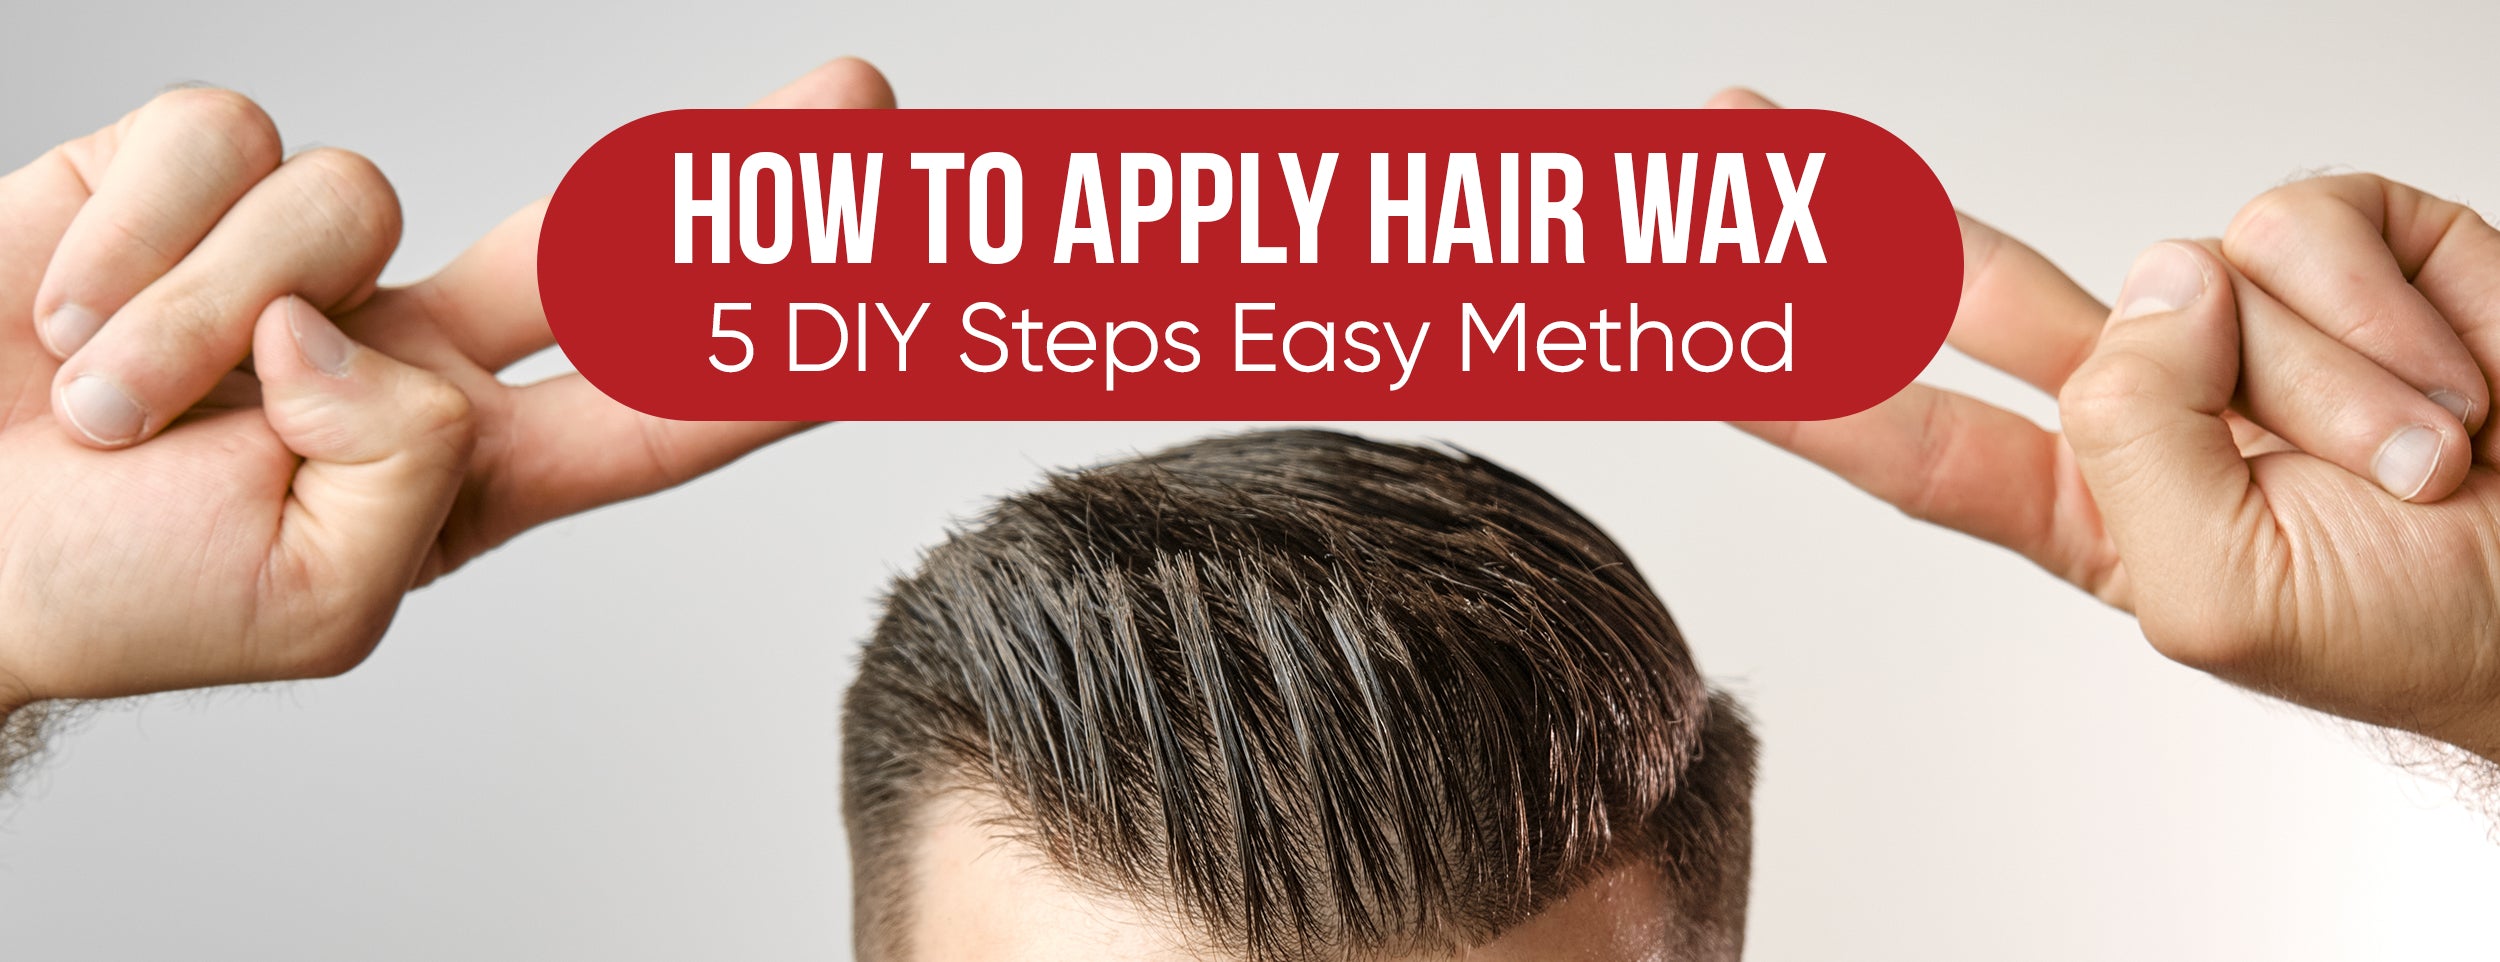 5 Steps & Stylish Hairdos for Applying Hair Wax